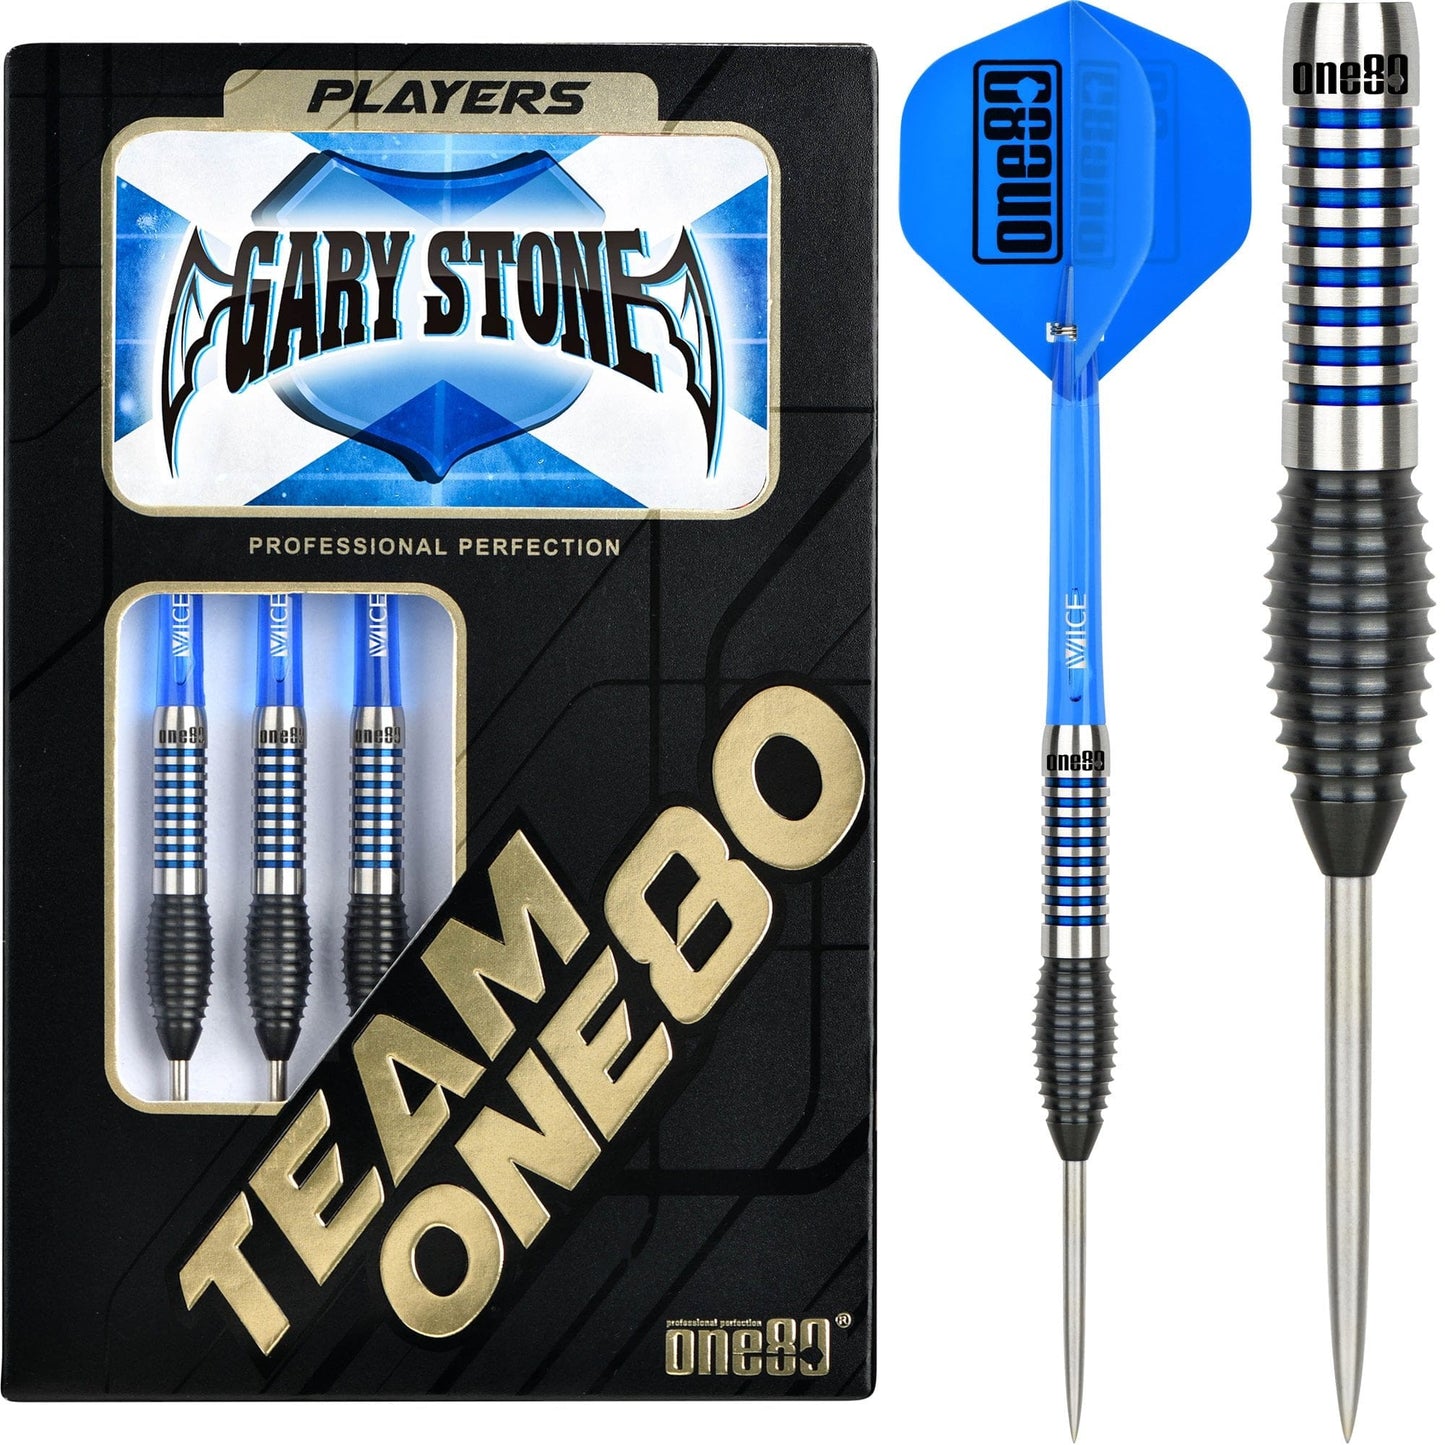 One80 Gary Stone Darts - Steel Tip - Black & Blue 21g